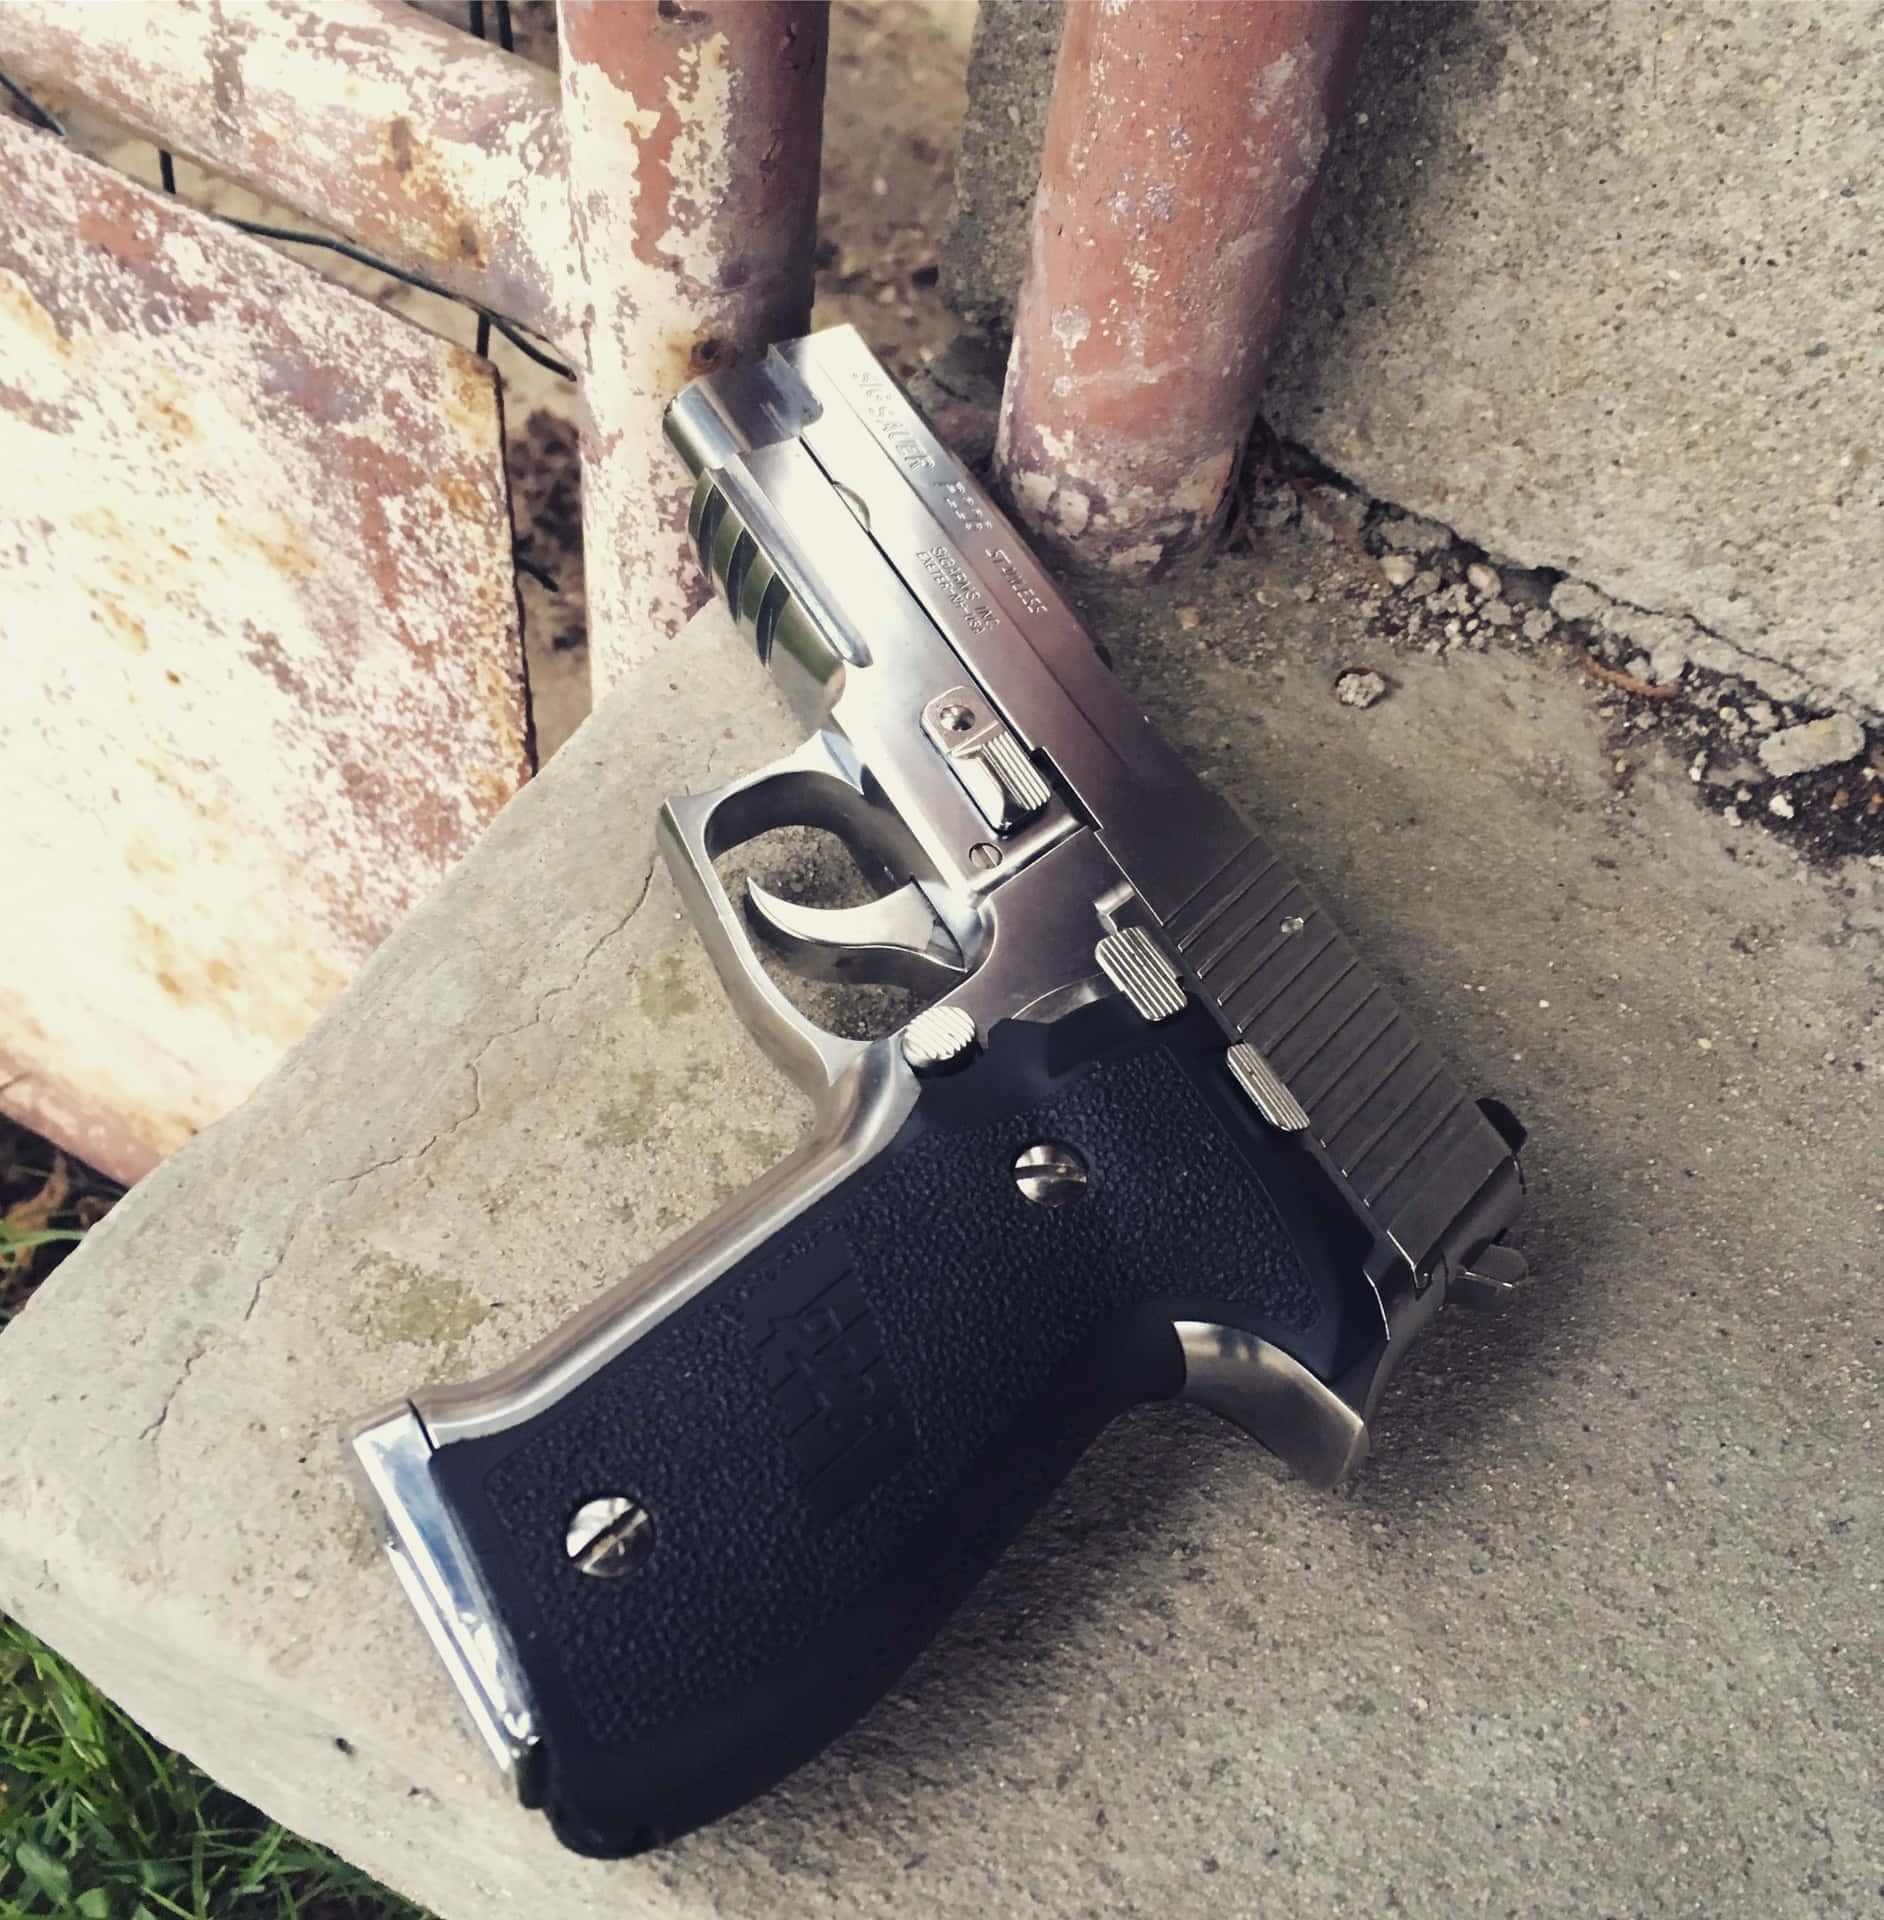 Pistol Placed Down A Concrete Surface Picture